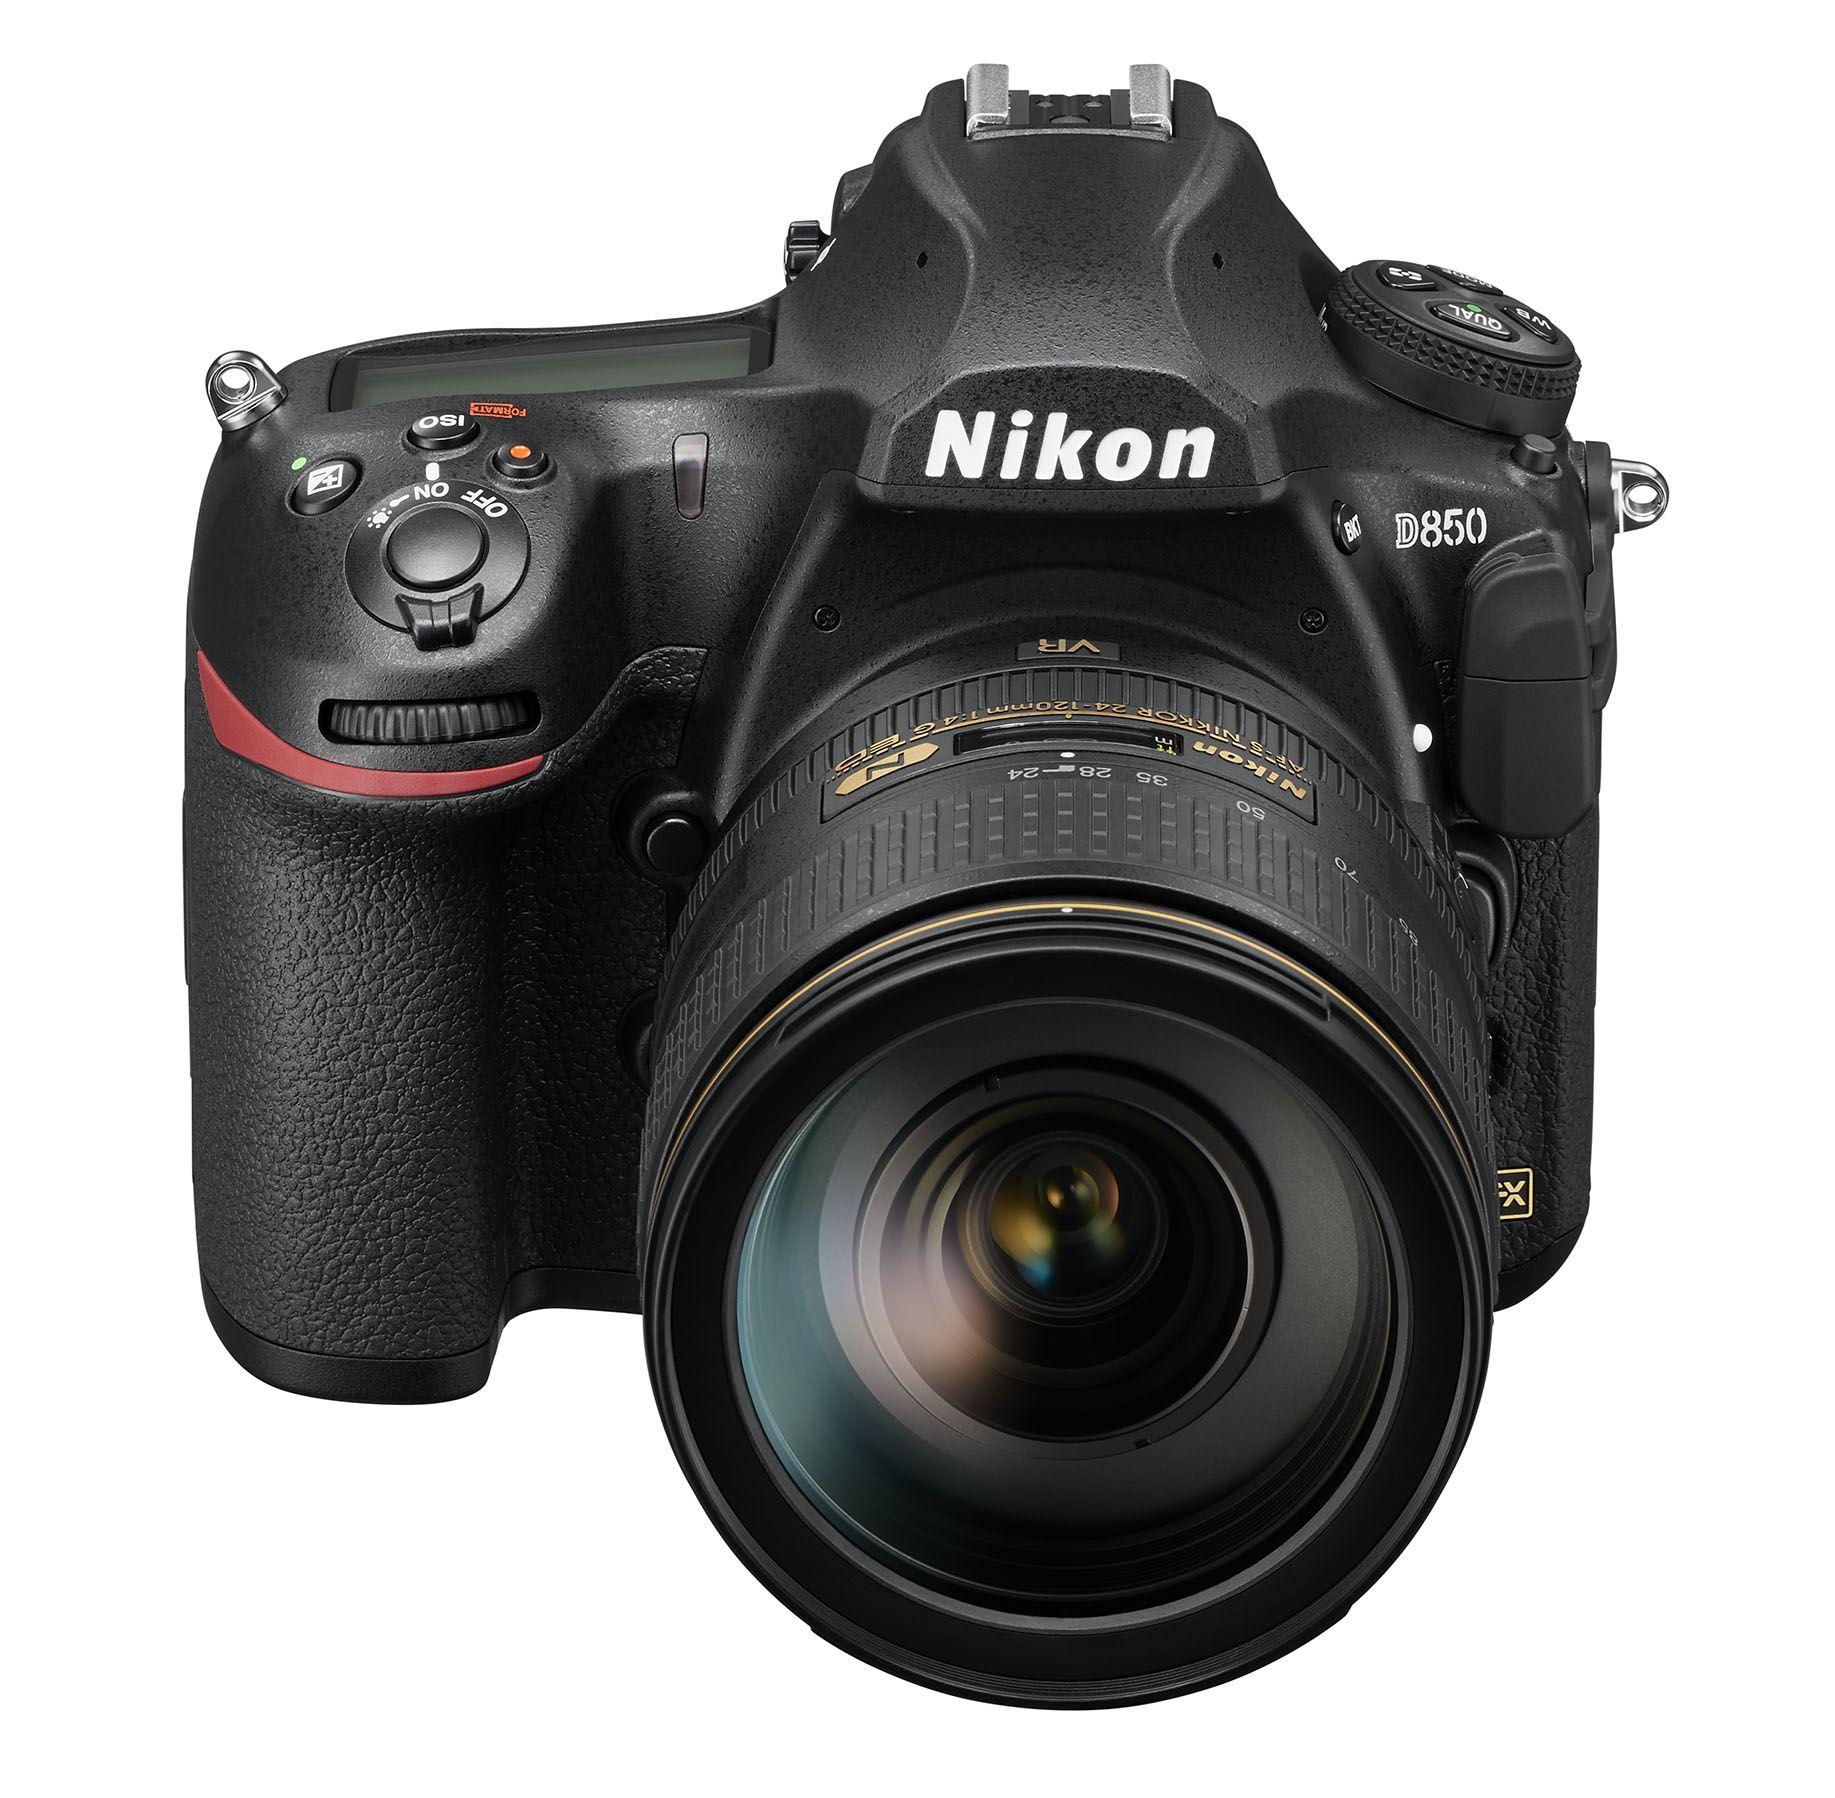 Nikon's new D850 has 45.7 megapixels and enough features to tempt